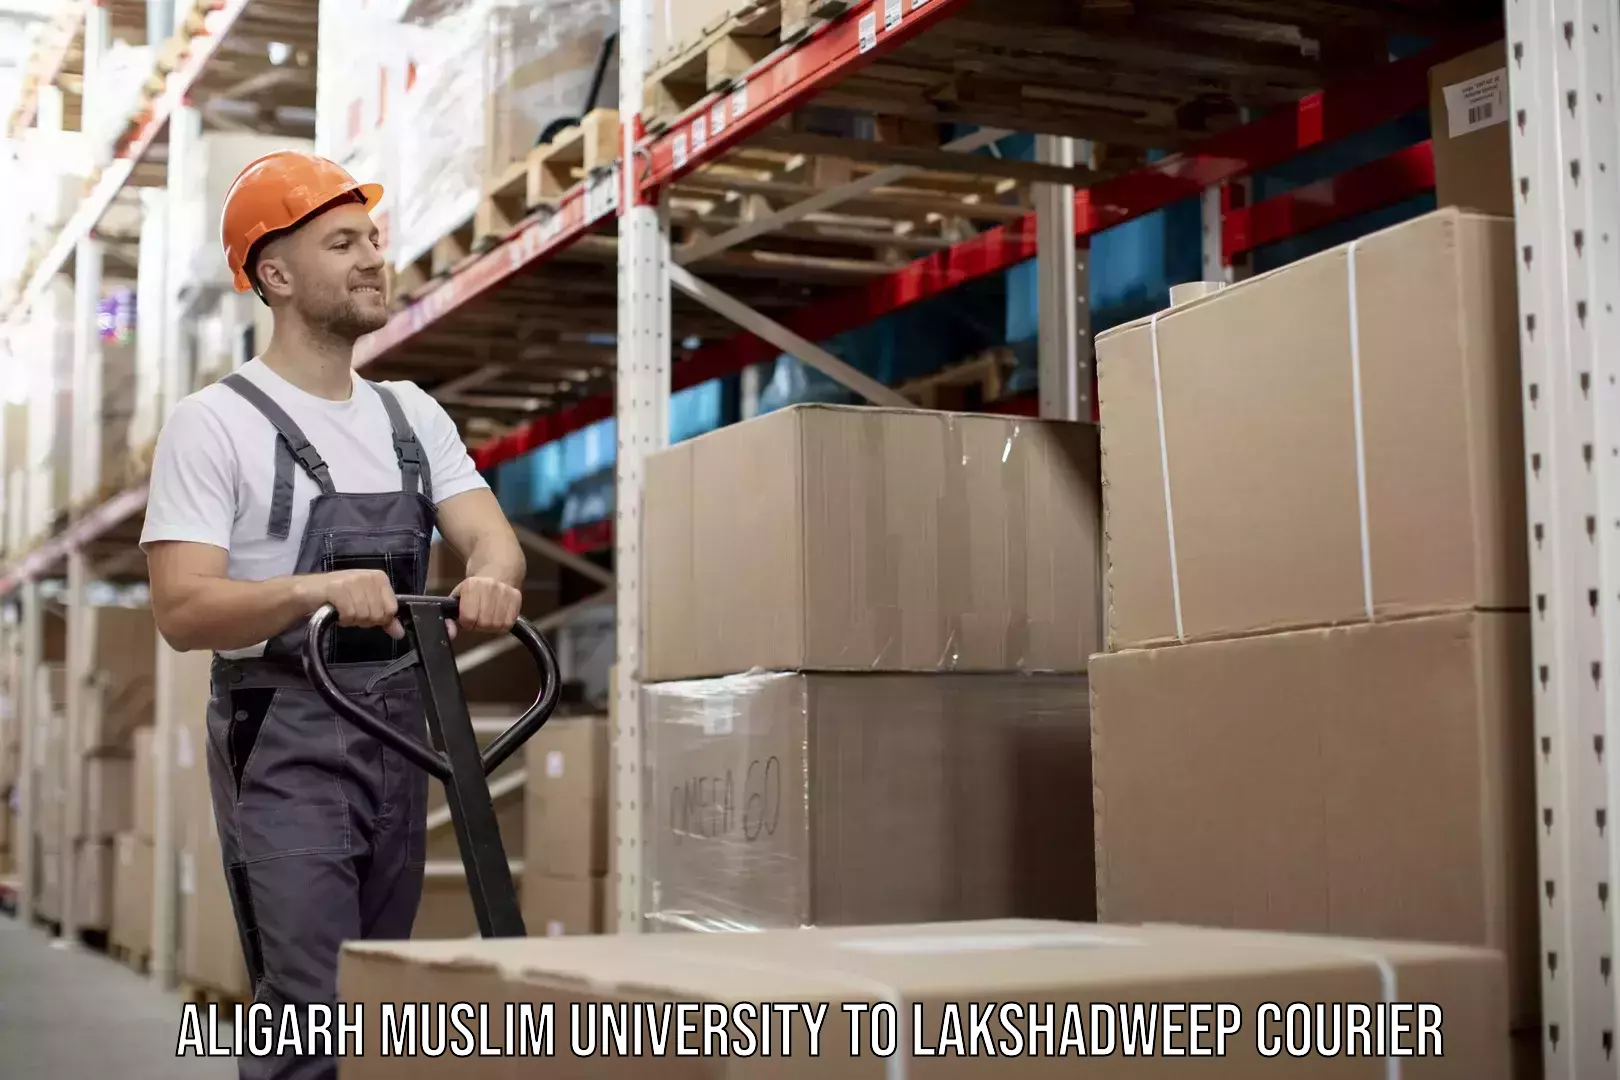 International courier networks Aligarh Muslim University to Lakshadweep